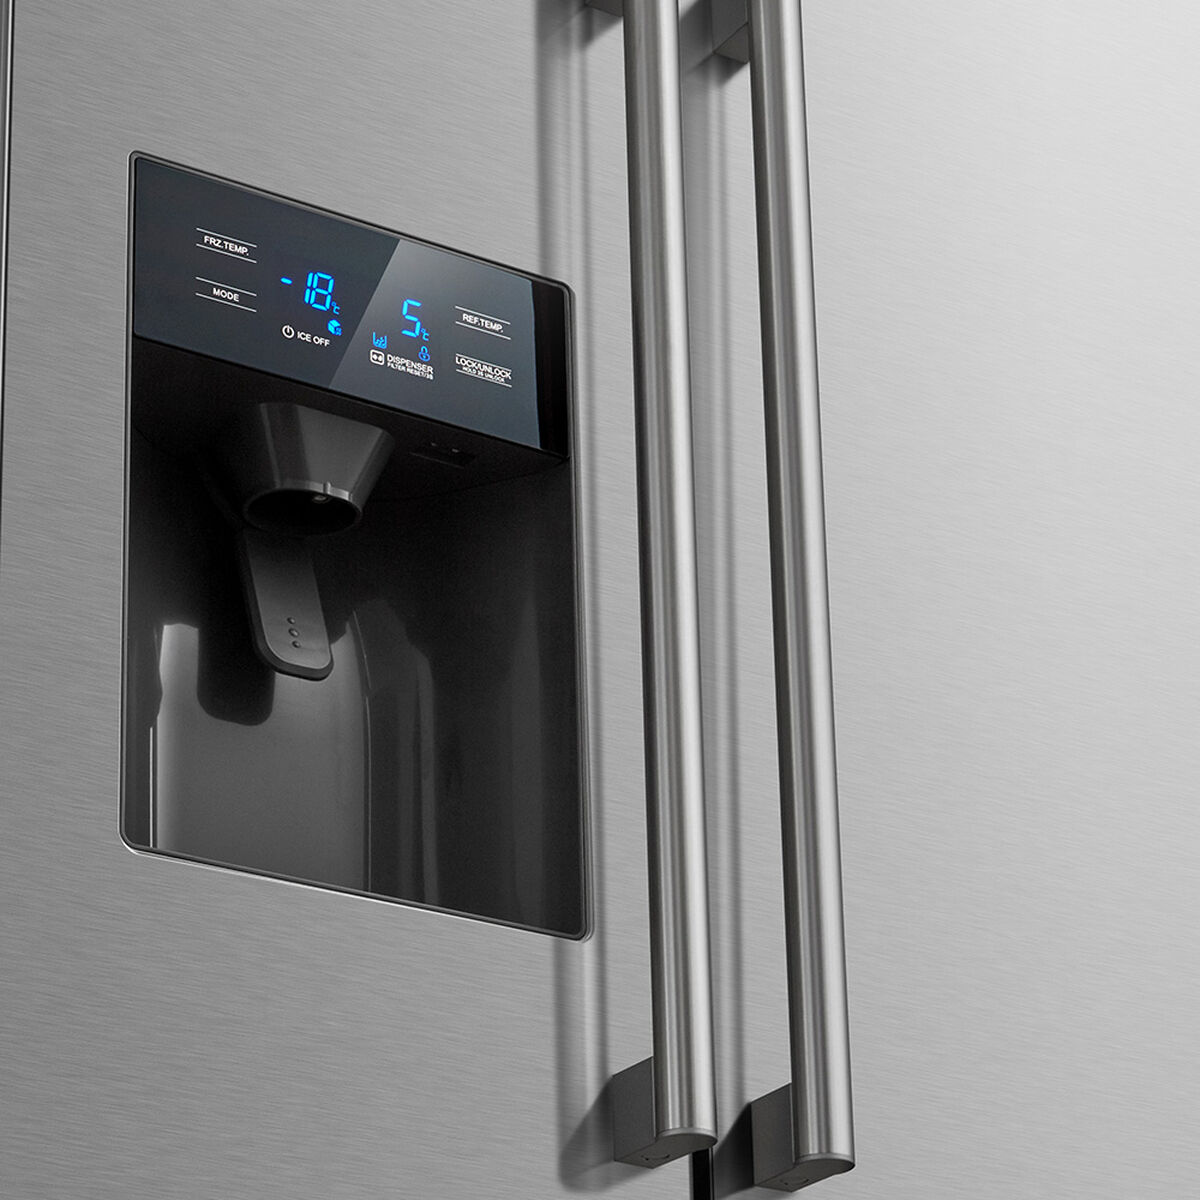 Refrigerador Side by Side Midea MDRS681FGE02 504 lts